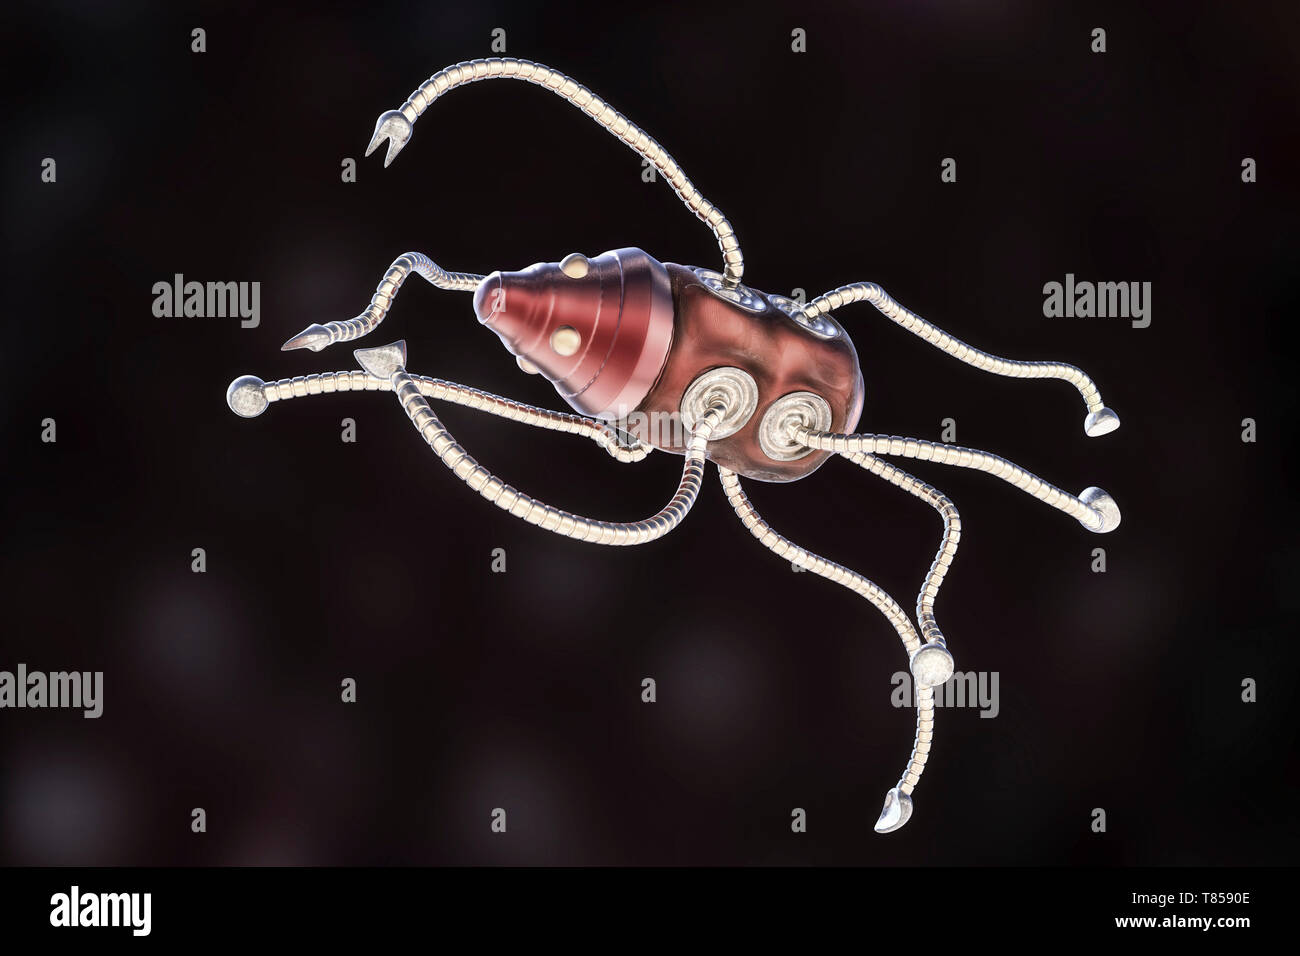 Medical nanorobot, illustration Stock Photo